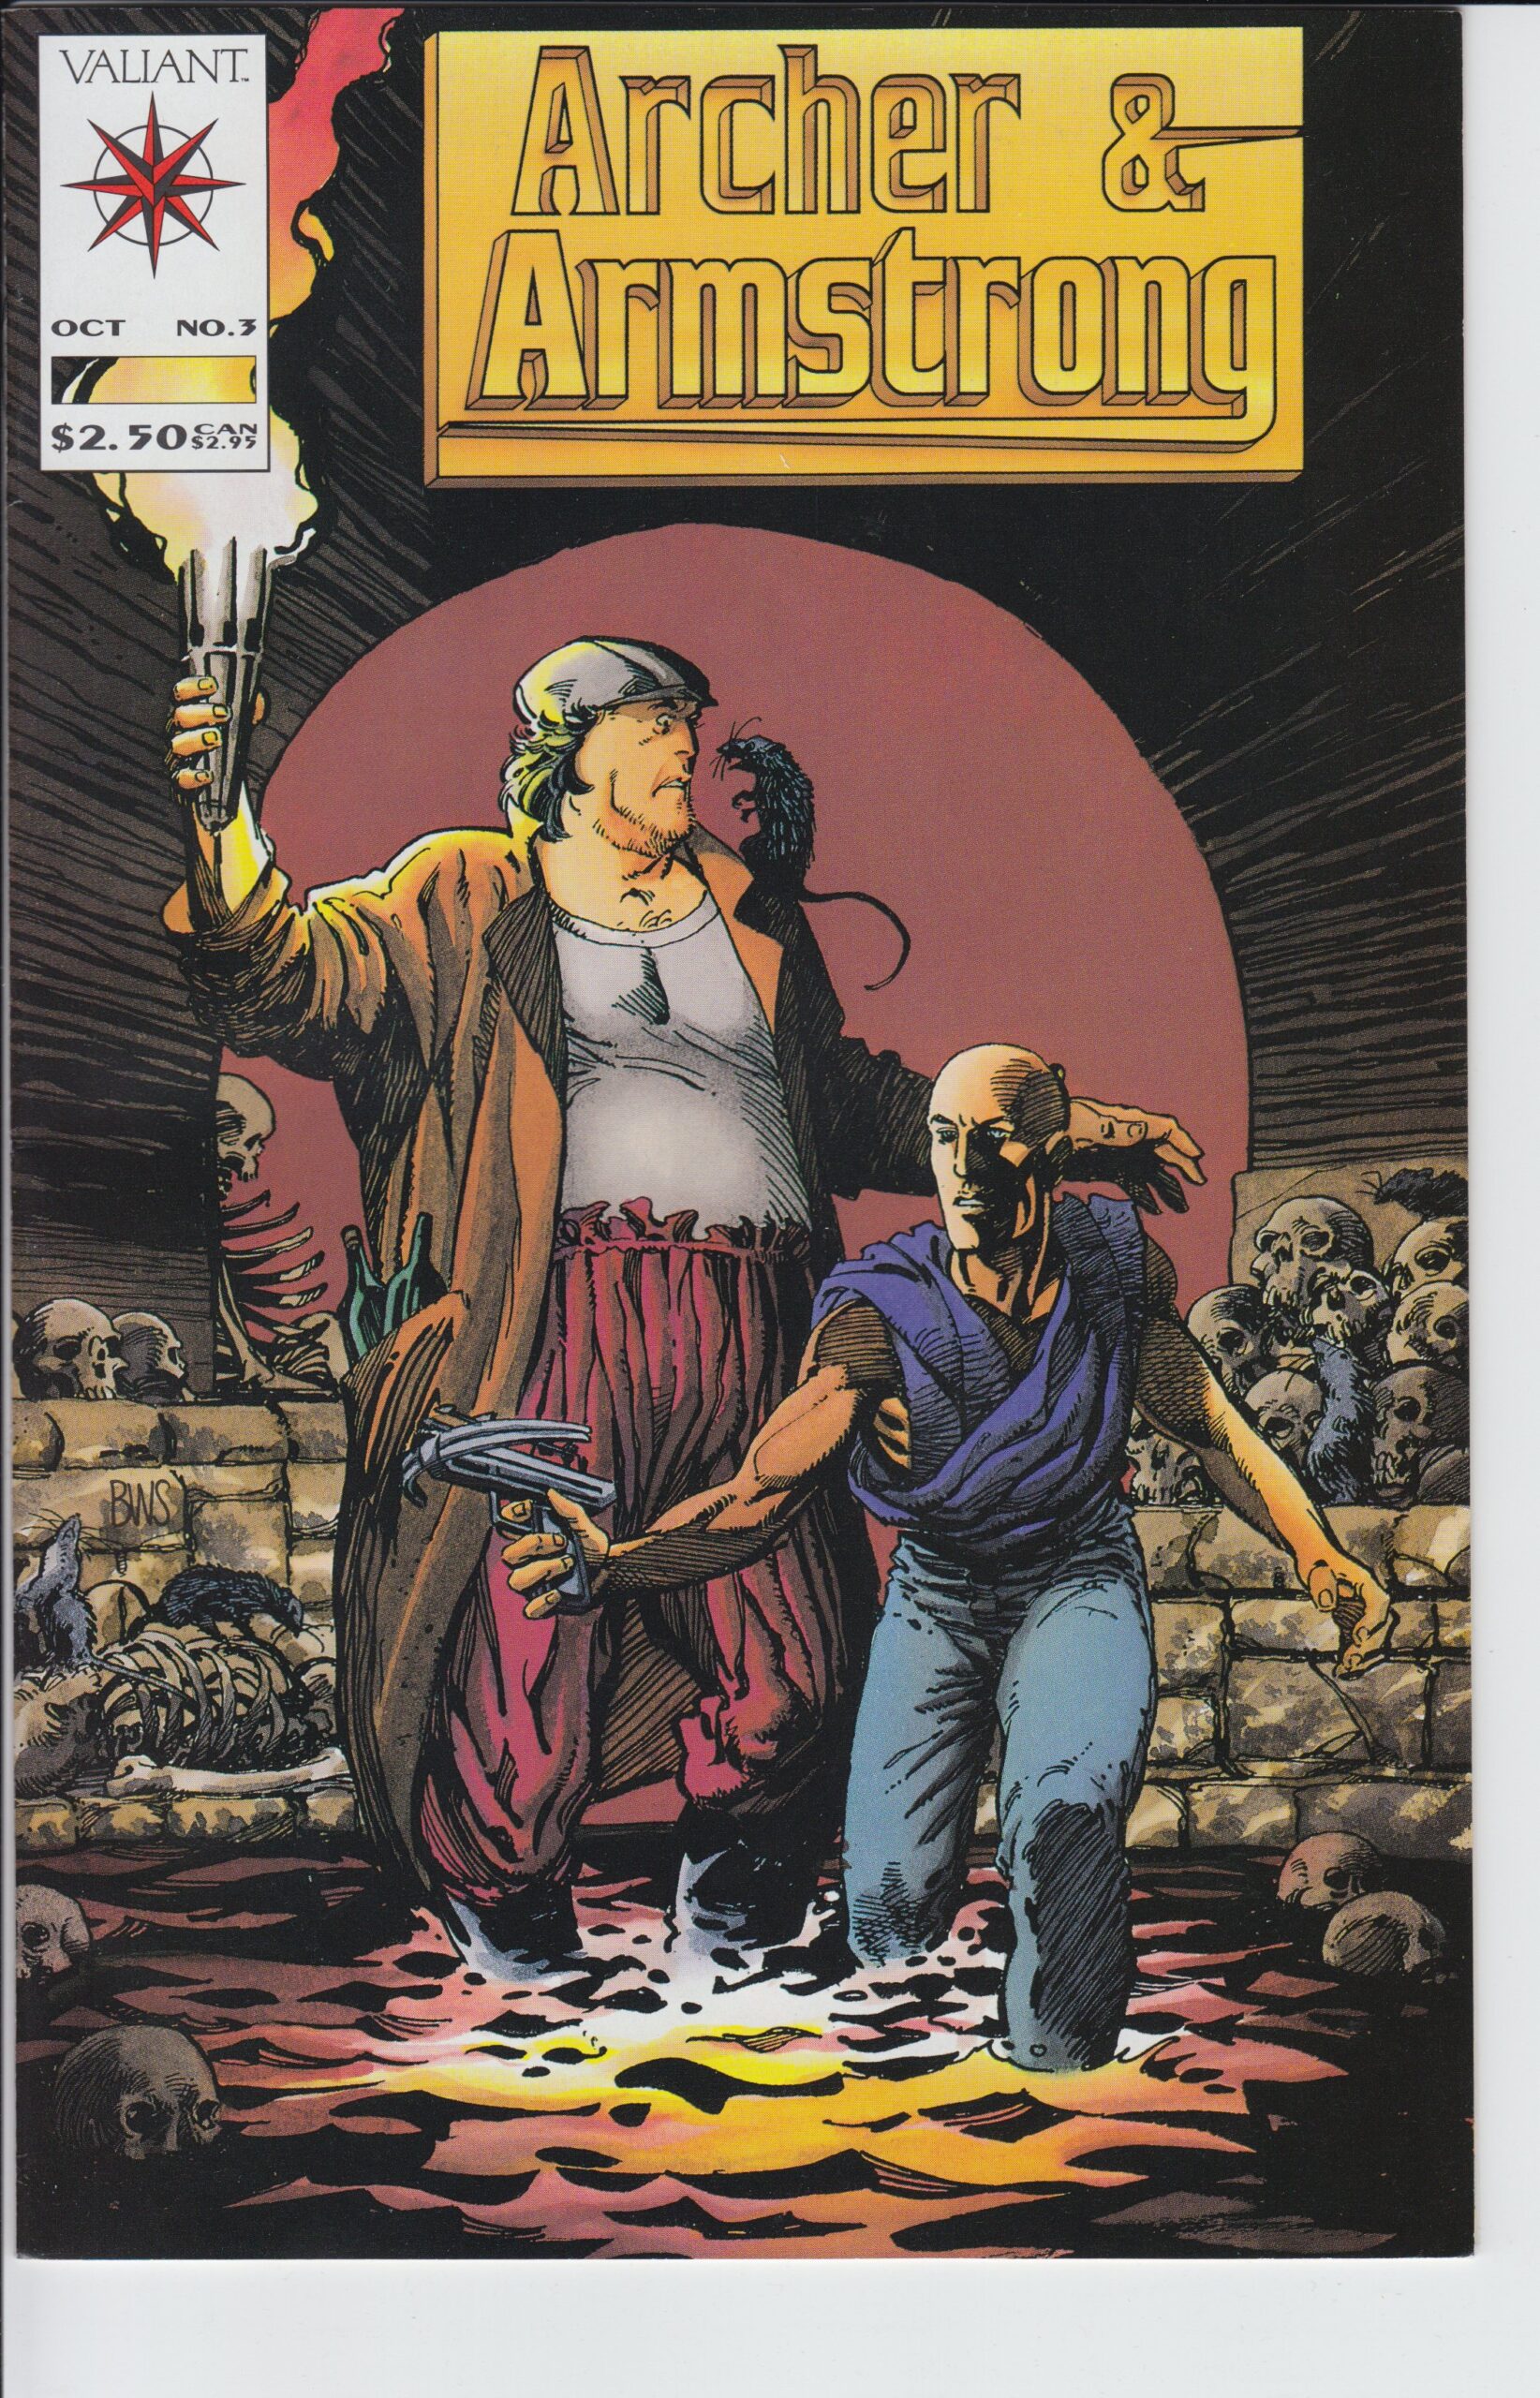 ARCHER & ARMSTRONG #3 (1992) VFNM, Barry Smith!